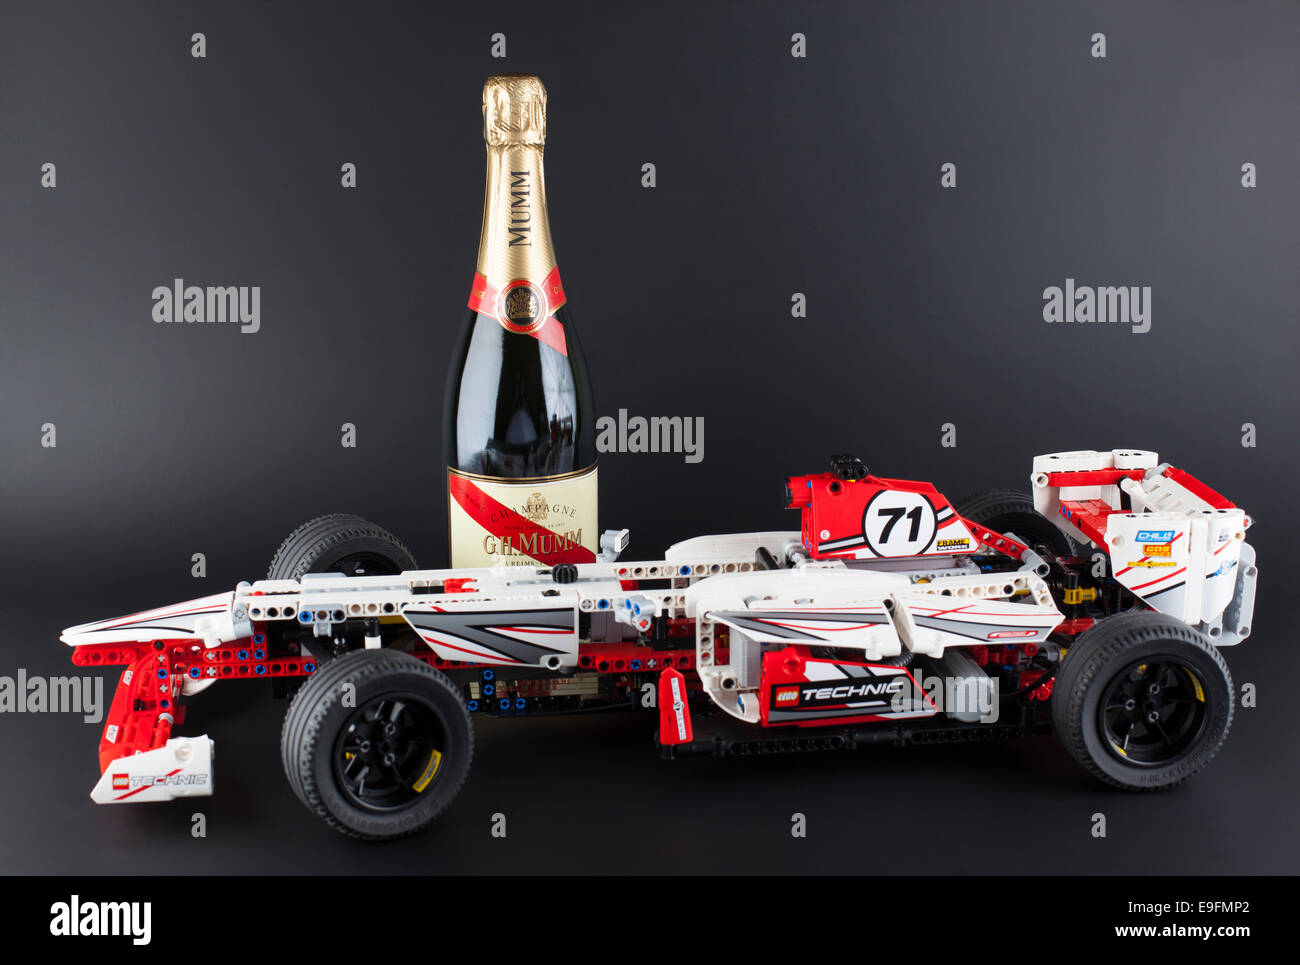 LEGO Technic Grand Prix Racer model with bottle of Champagne G.H.Mumm Brut  Cordon Rouge on black background Stock Photo - Alamy